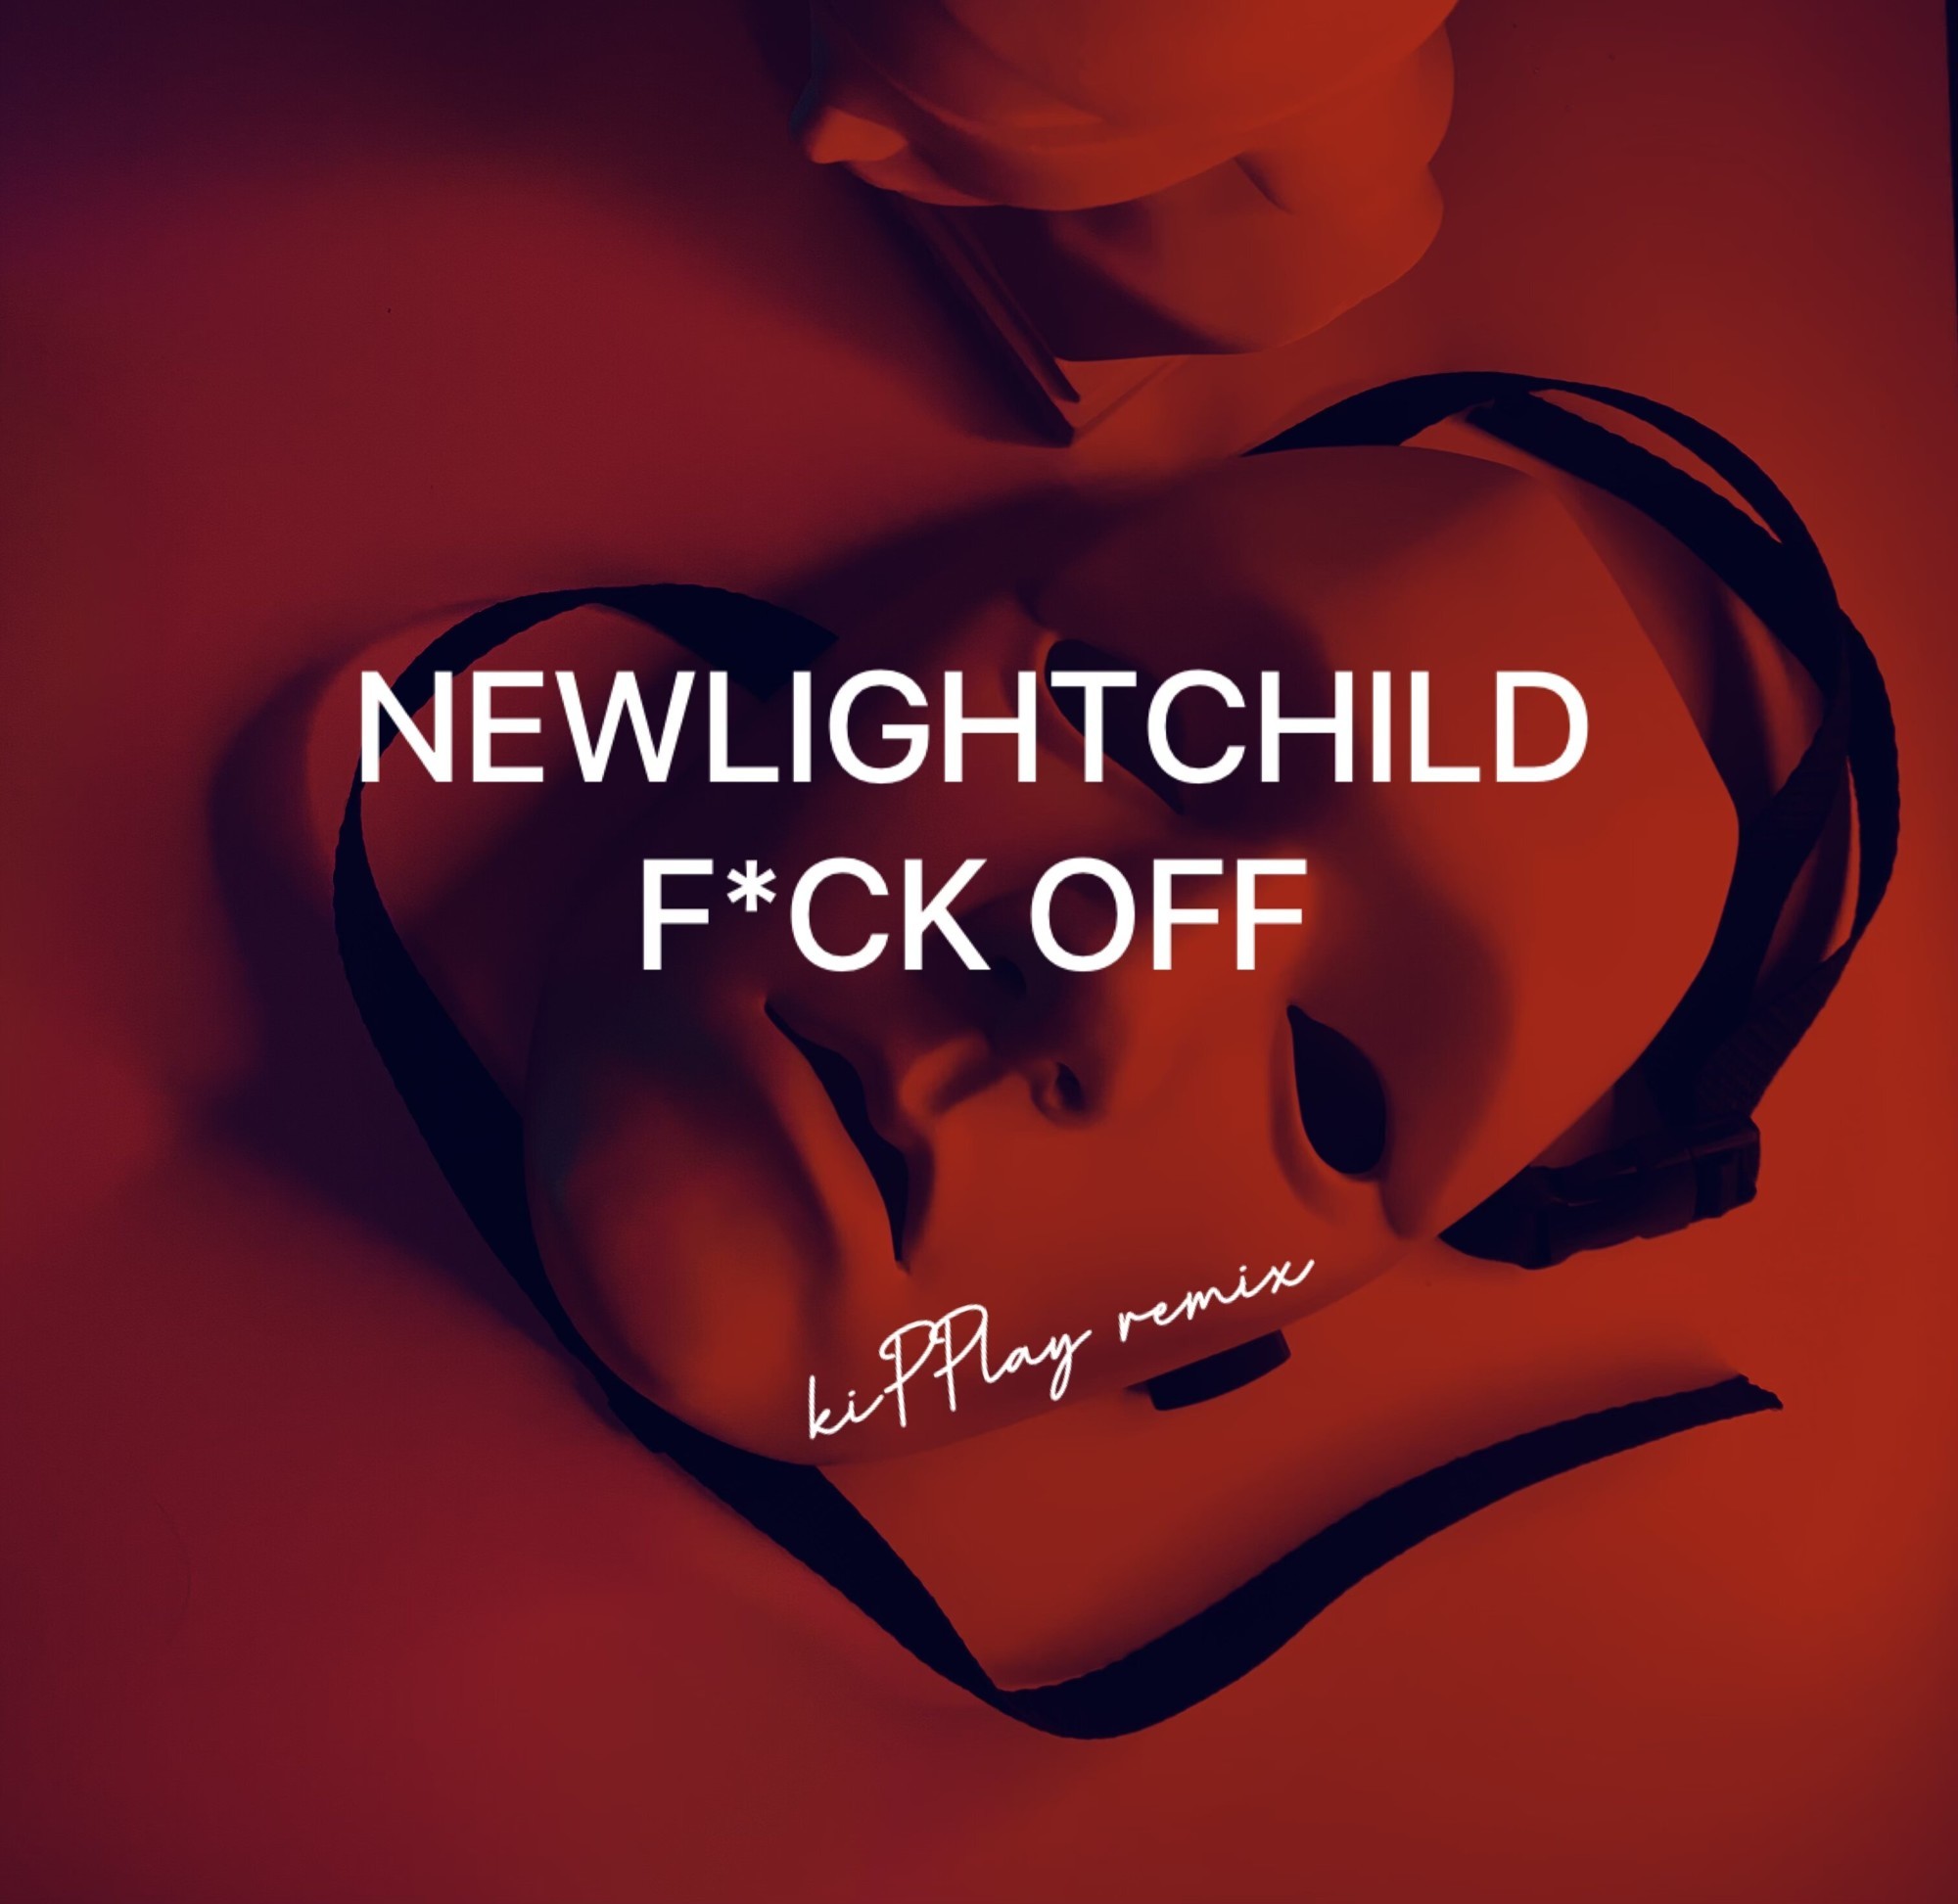 Newlightchild amore. Newlightchild лицо. F*CK off newlightchild. Newlightchild имя. Newlightchild Омск.